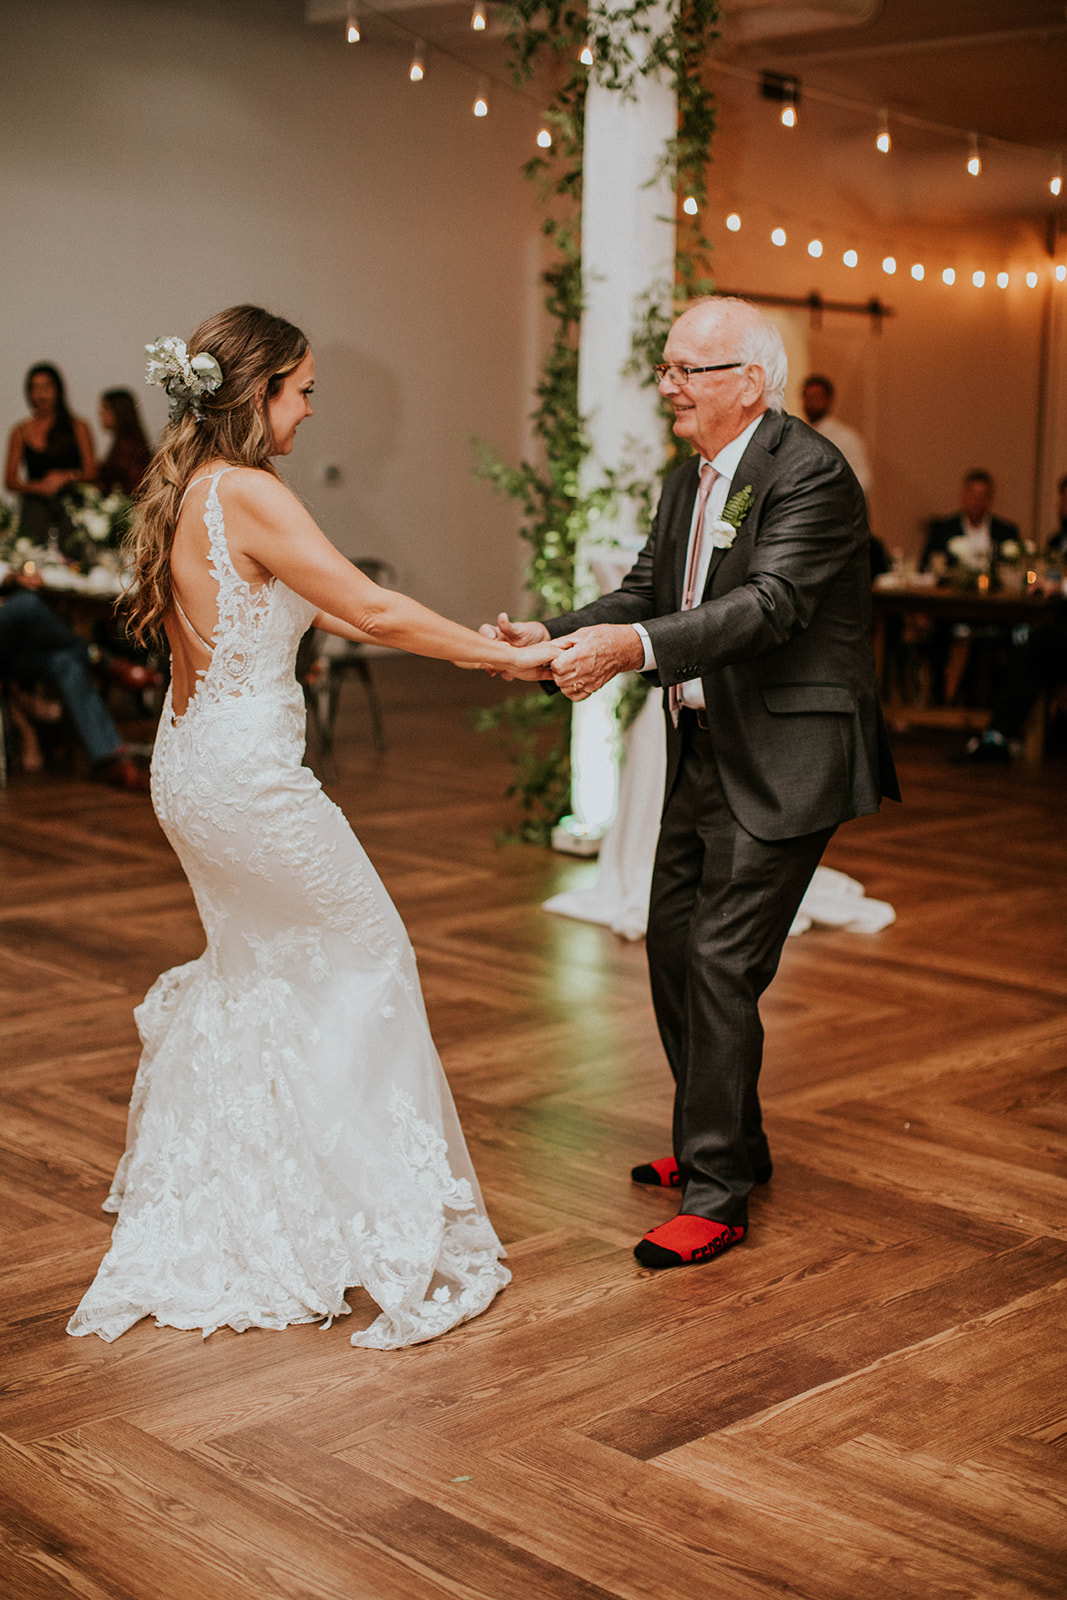 Dancing at wedding reception | Nashville Bride Guide